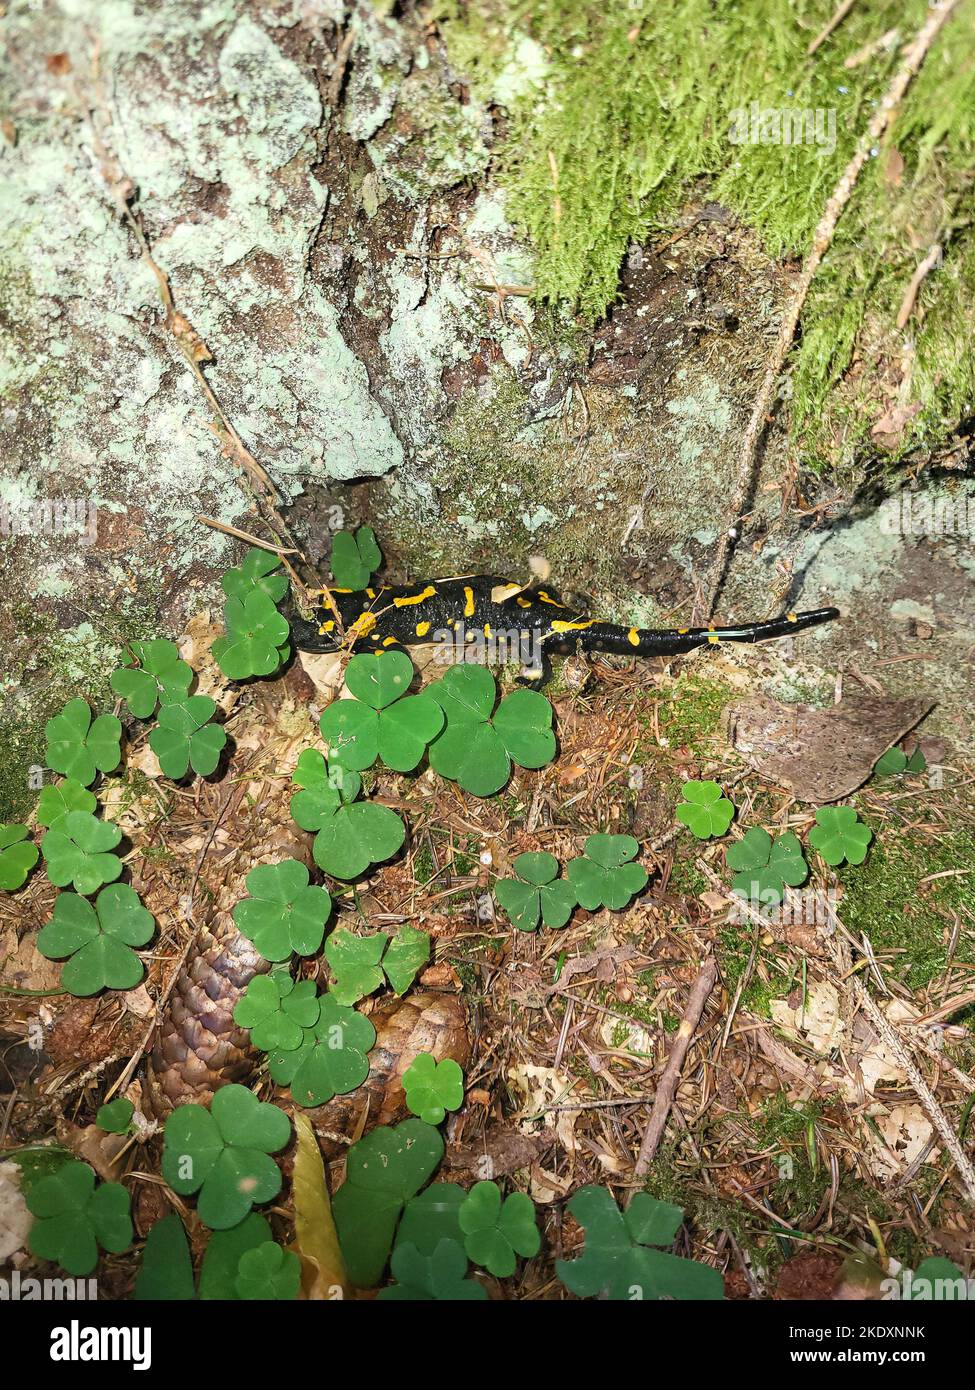 Austria, fire salamander on forest floor Stock Photo